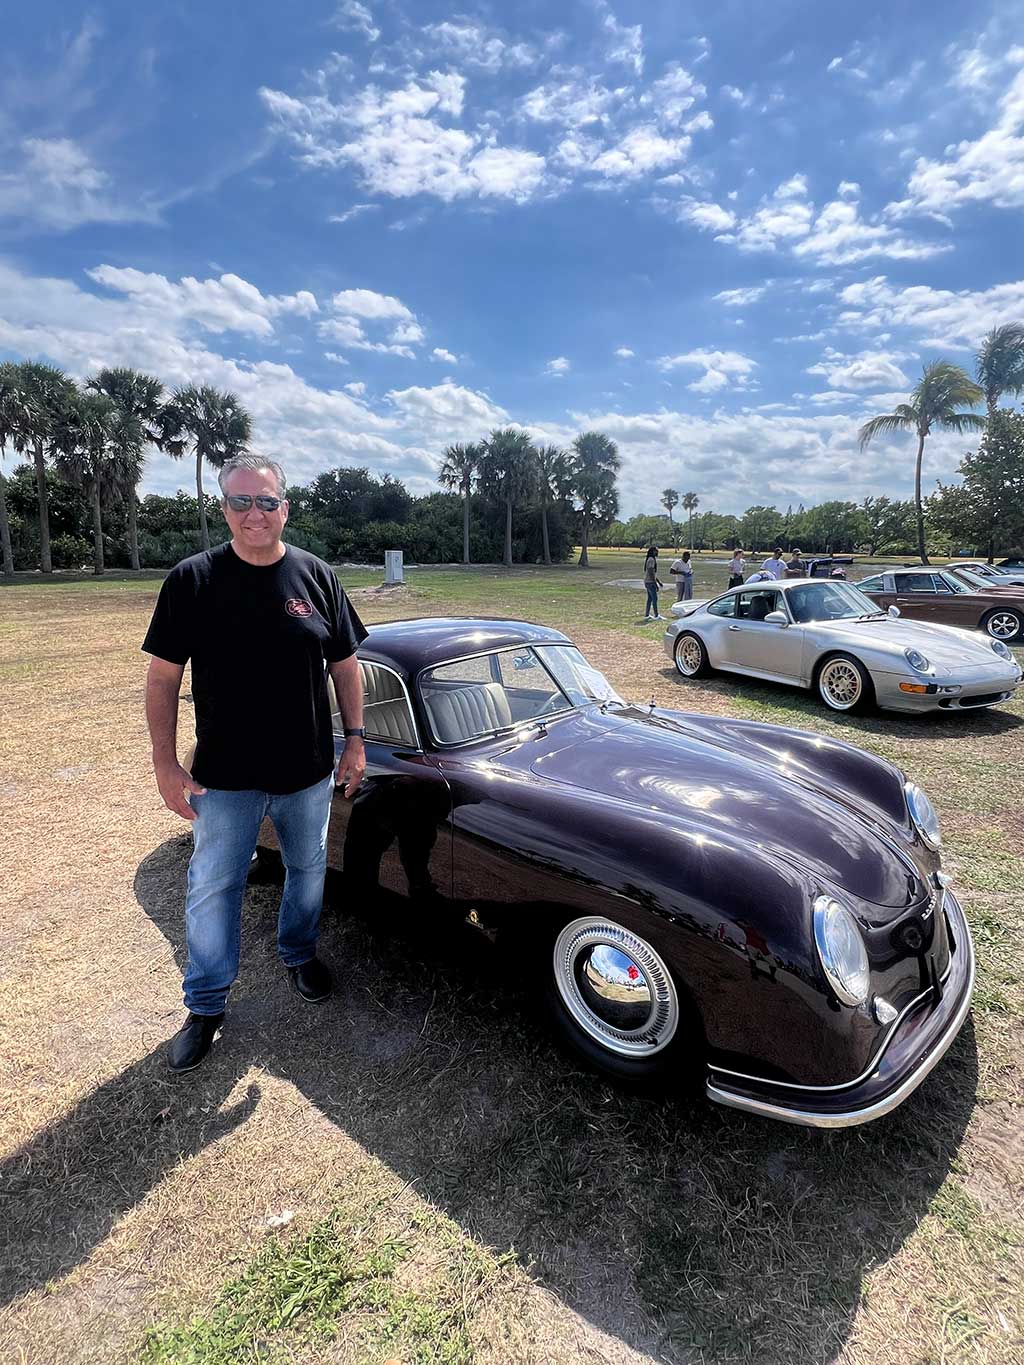 Miami Springs Councilman Jorge Santin next to a classic Porsche (Photo credit: Jorge Santin)